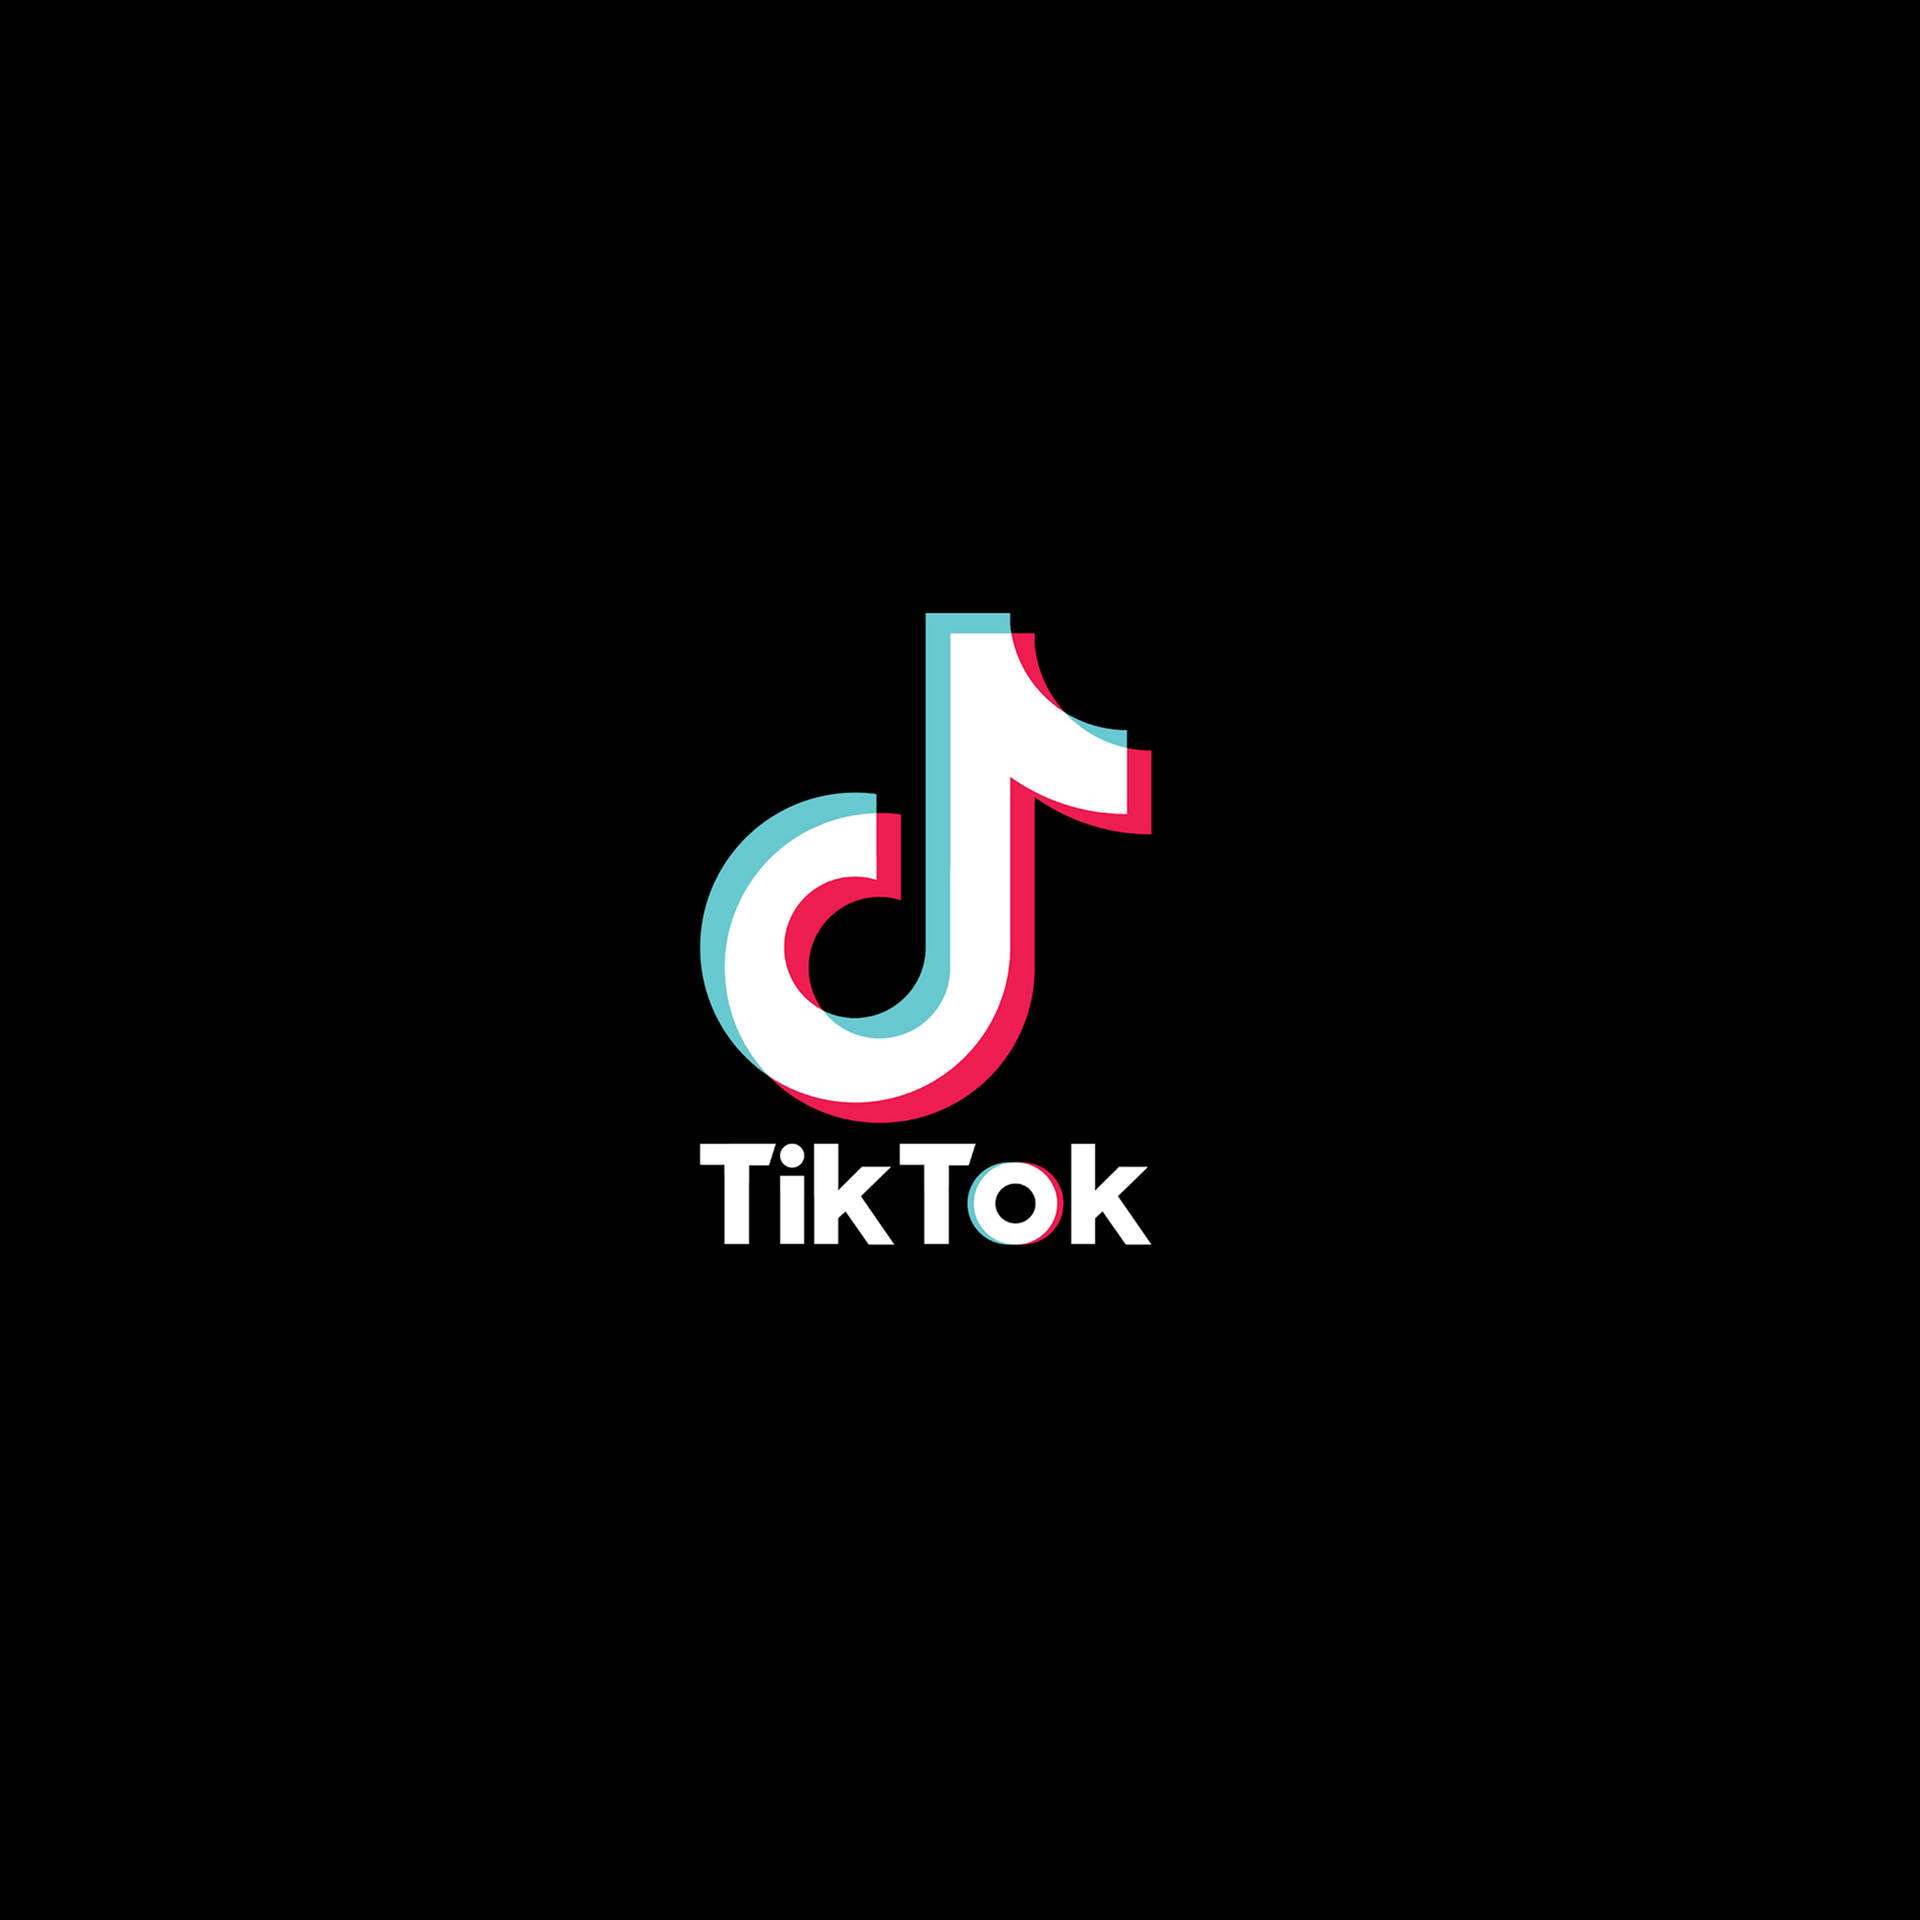 TikTok Logo Paint Splash Wallpaper